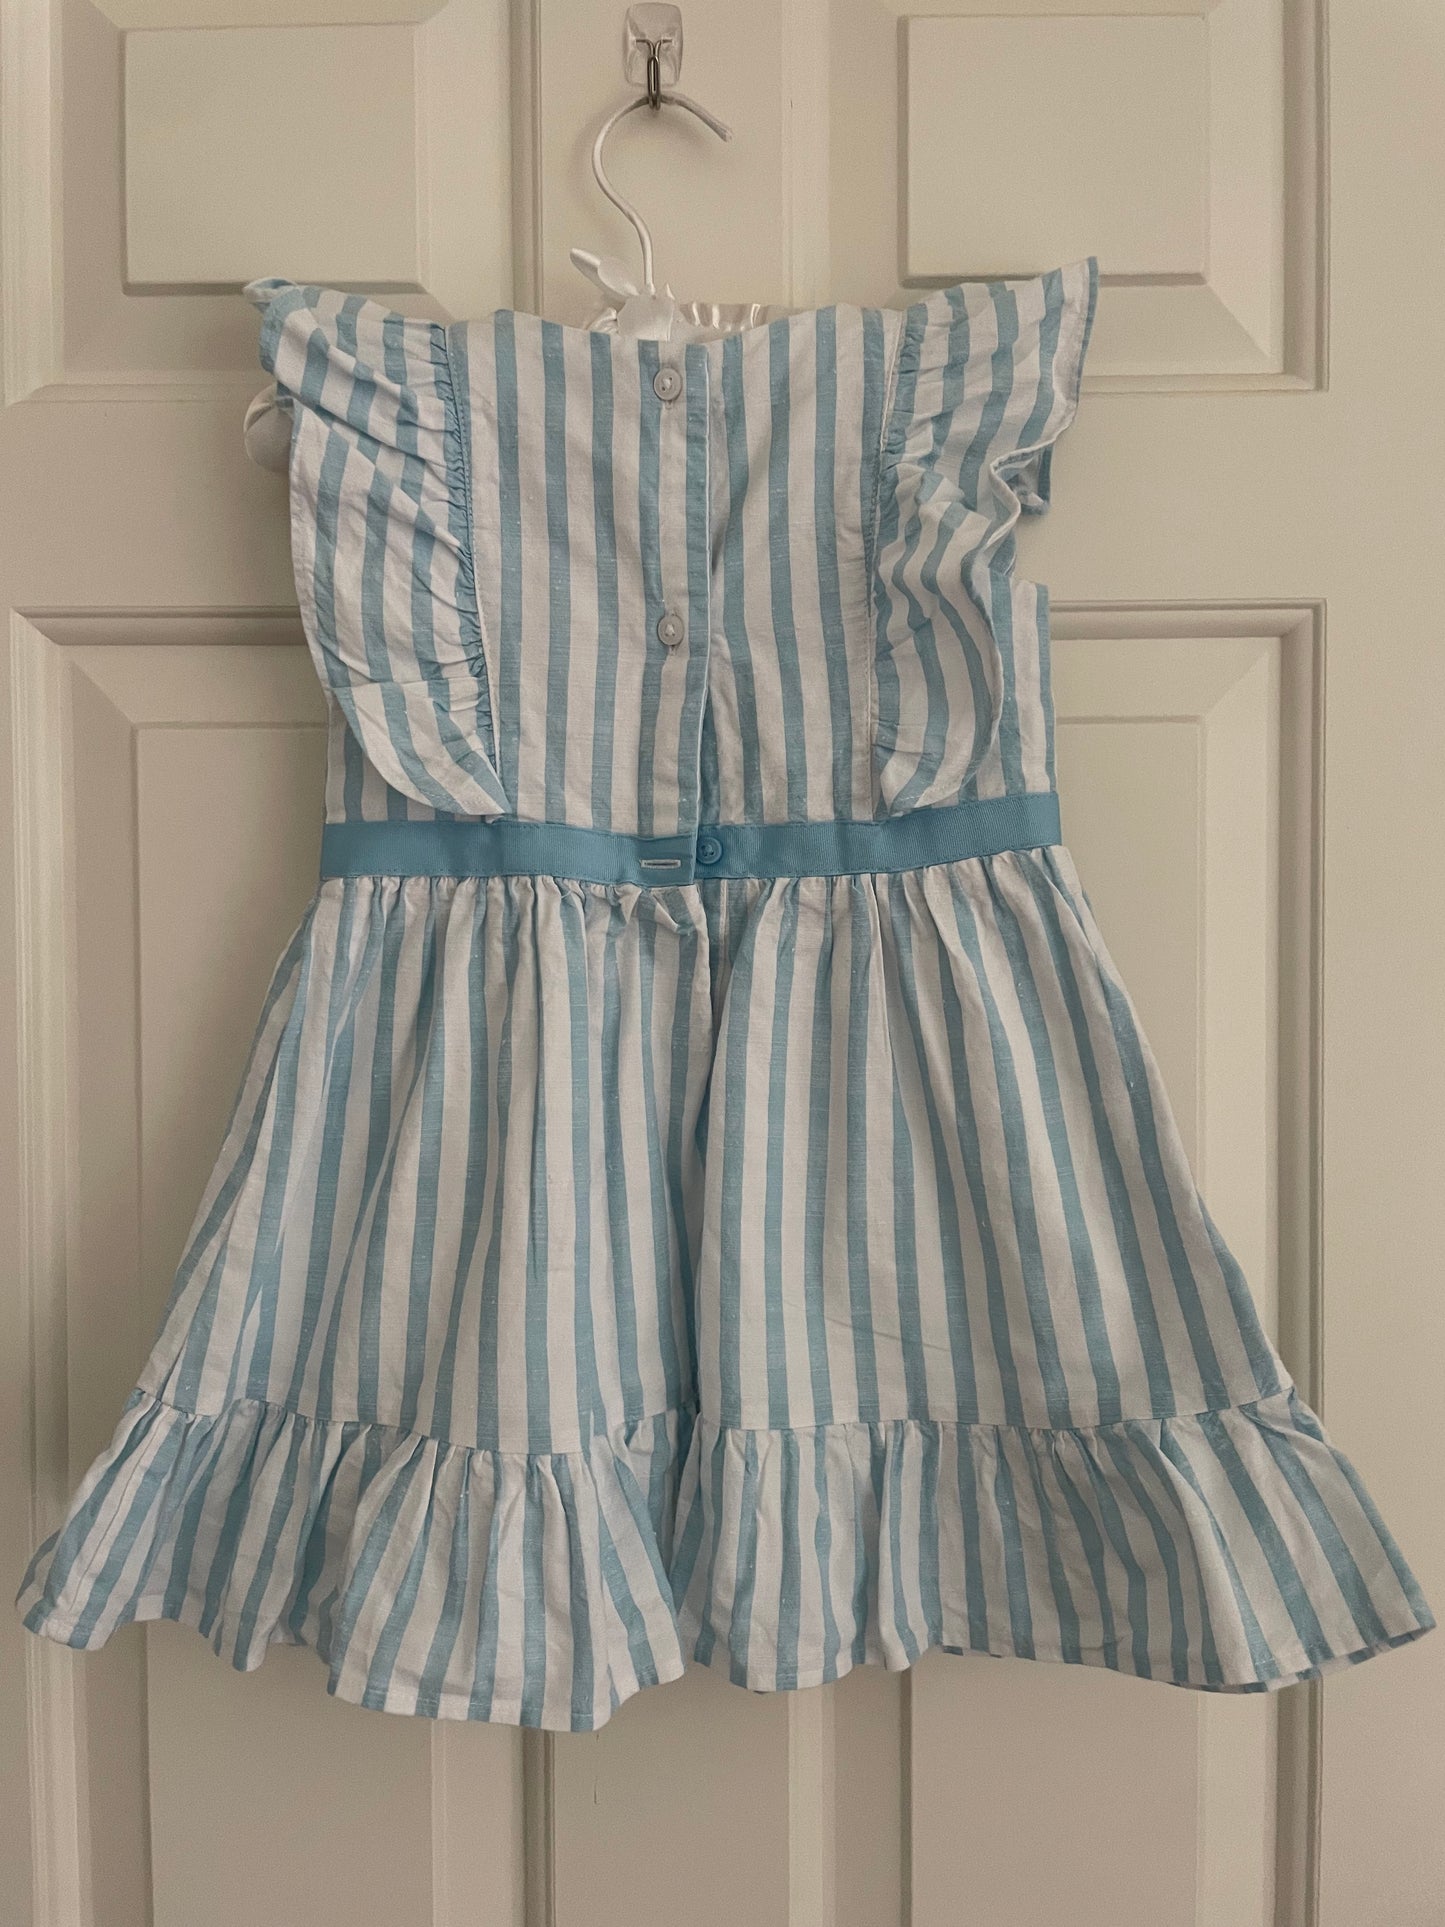 Janie and Jack Girls Blue and White Stripe Dress 2T PPU Loveland/Miami Township